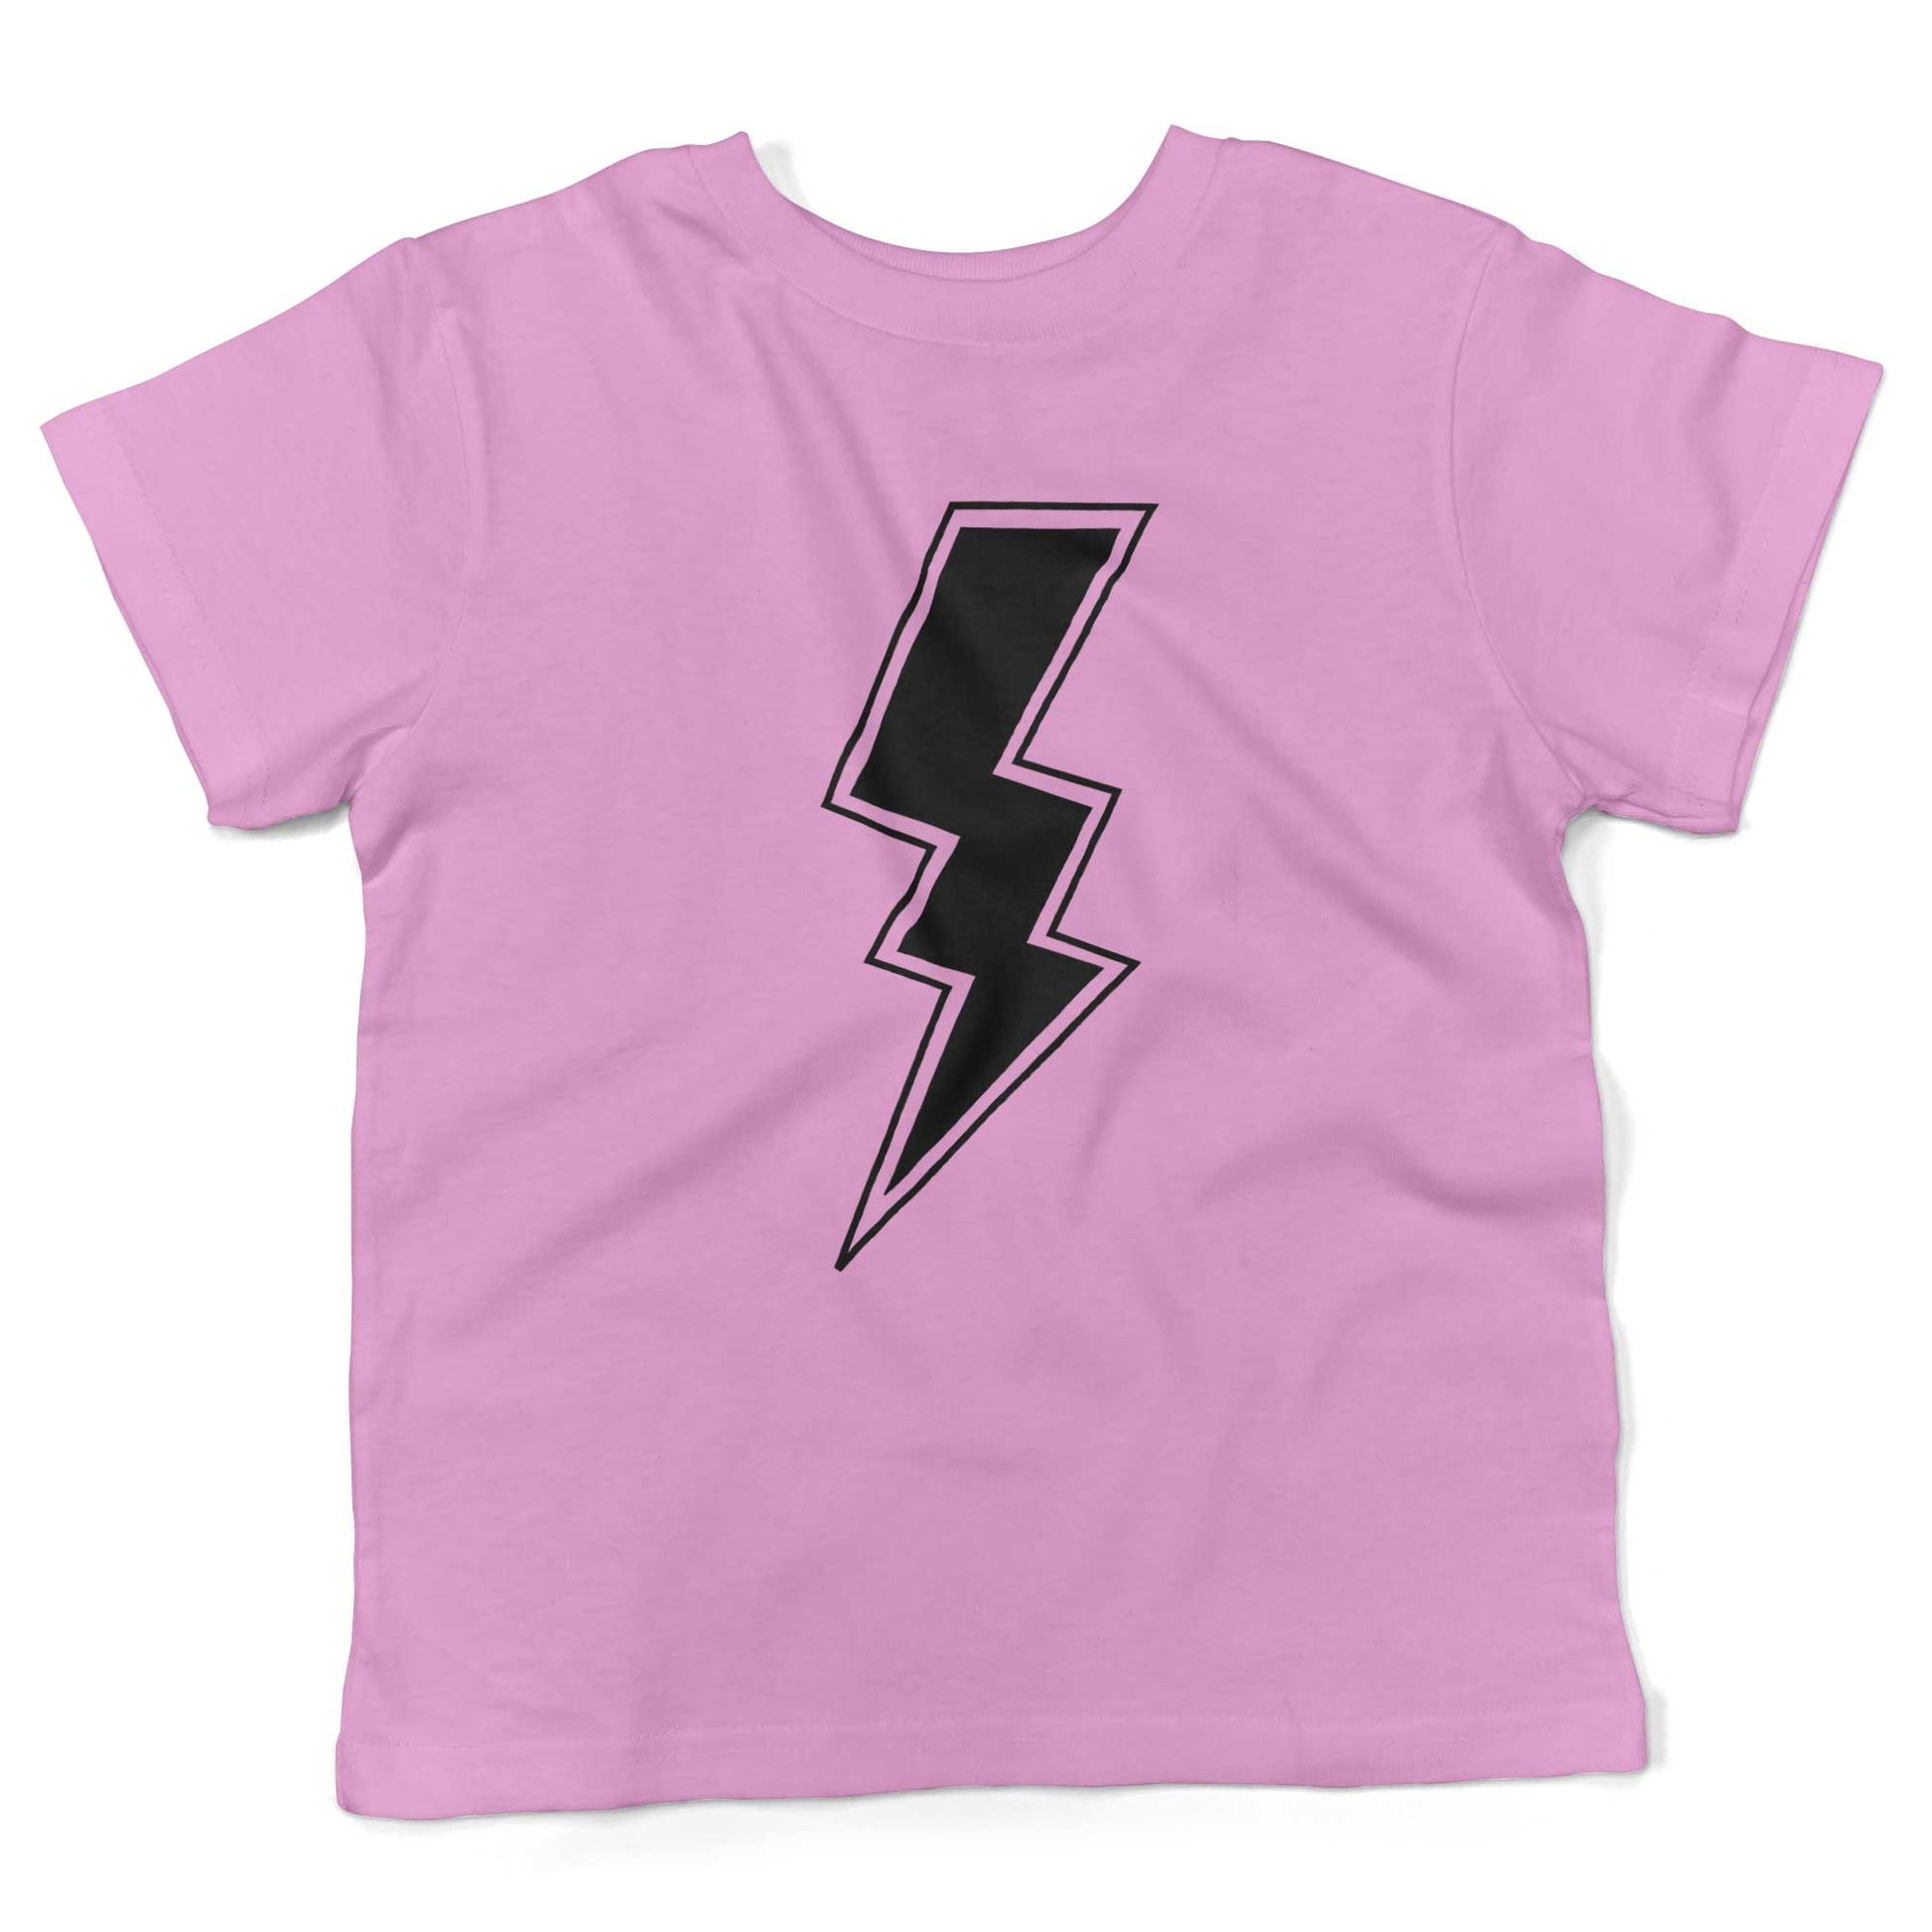 Giant Lightning Bolt Toddler Shirt-Organic Pink-2T